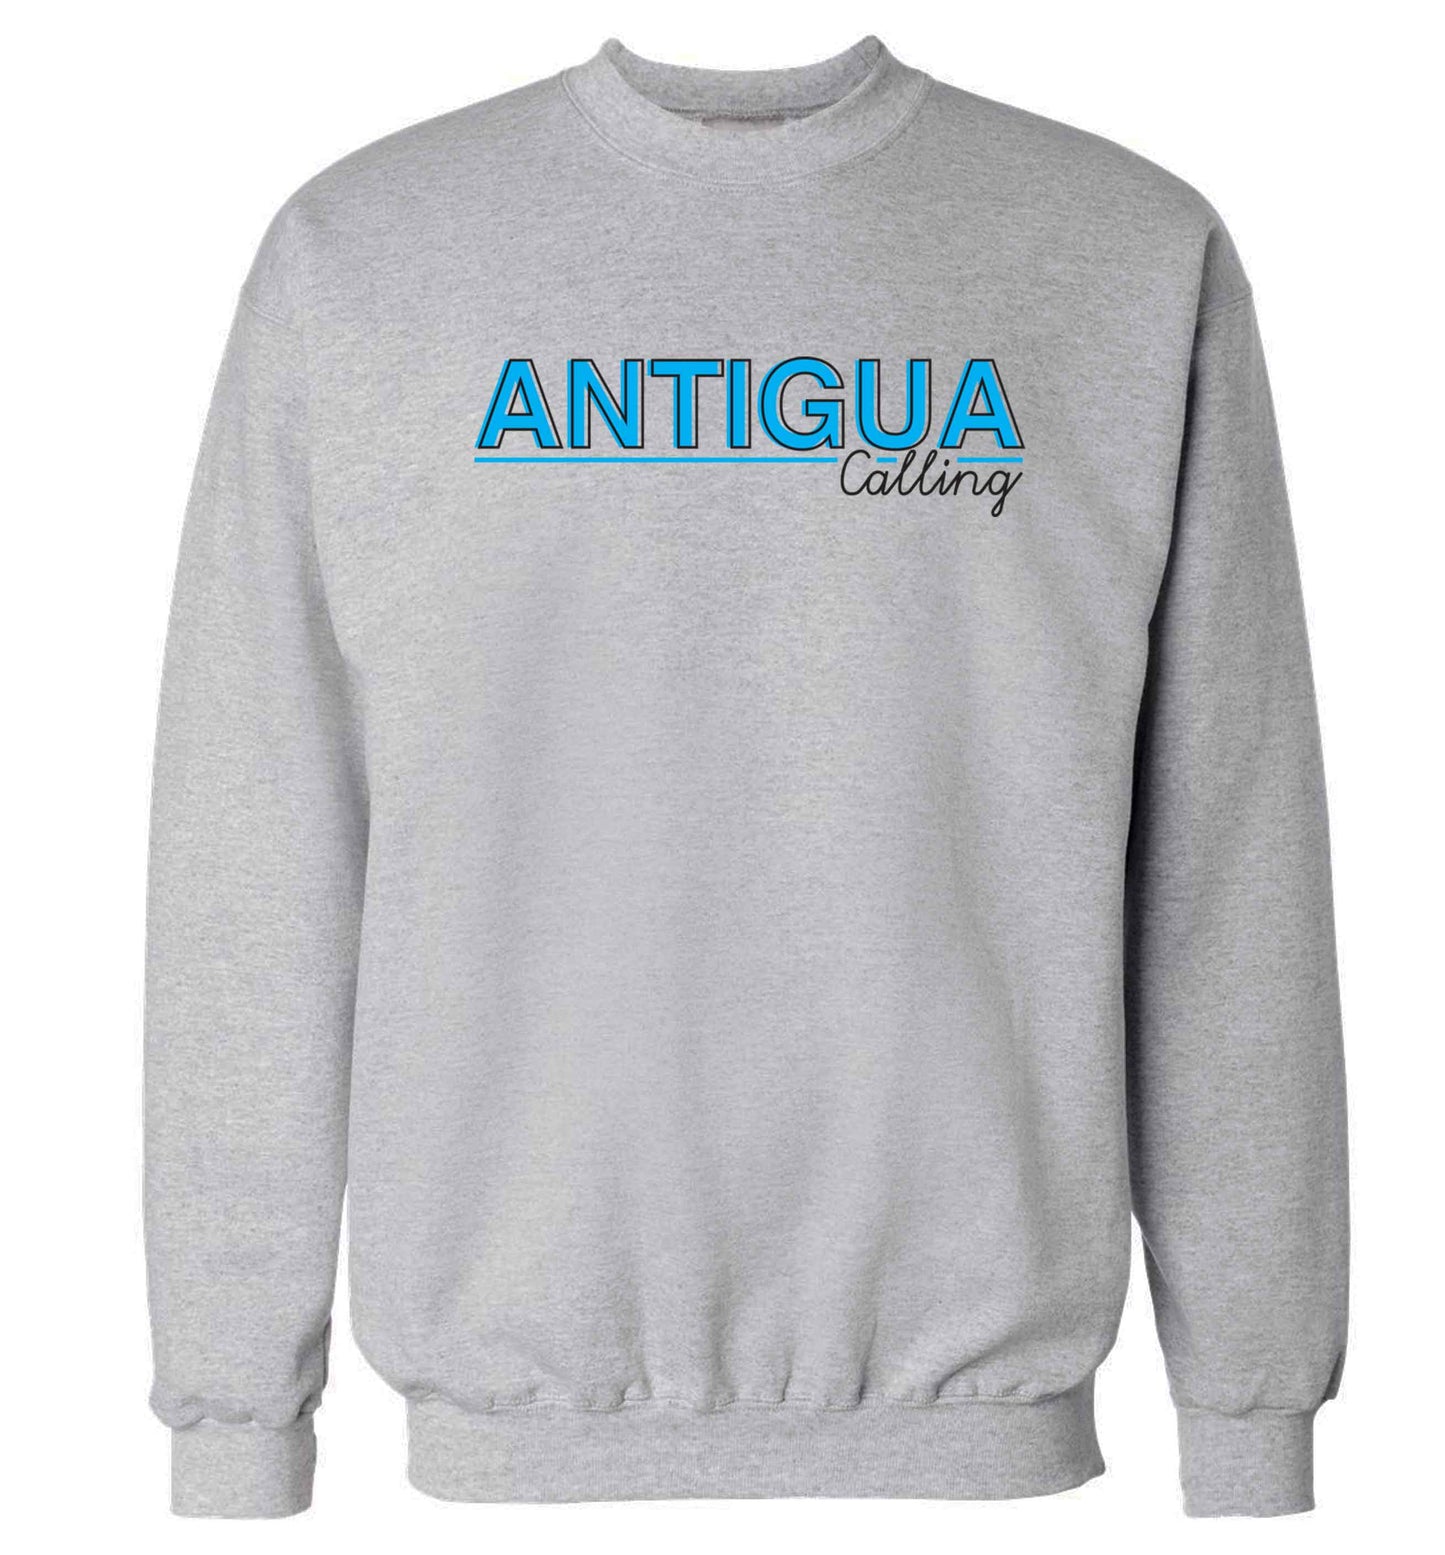 Antigua calling Adult's unisex grey Sweater 2XL